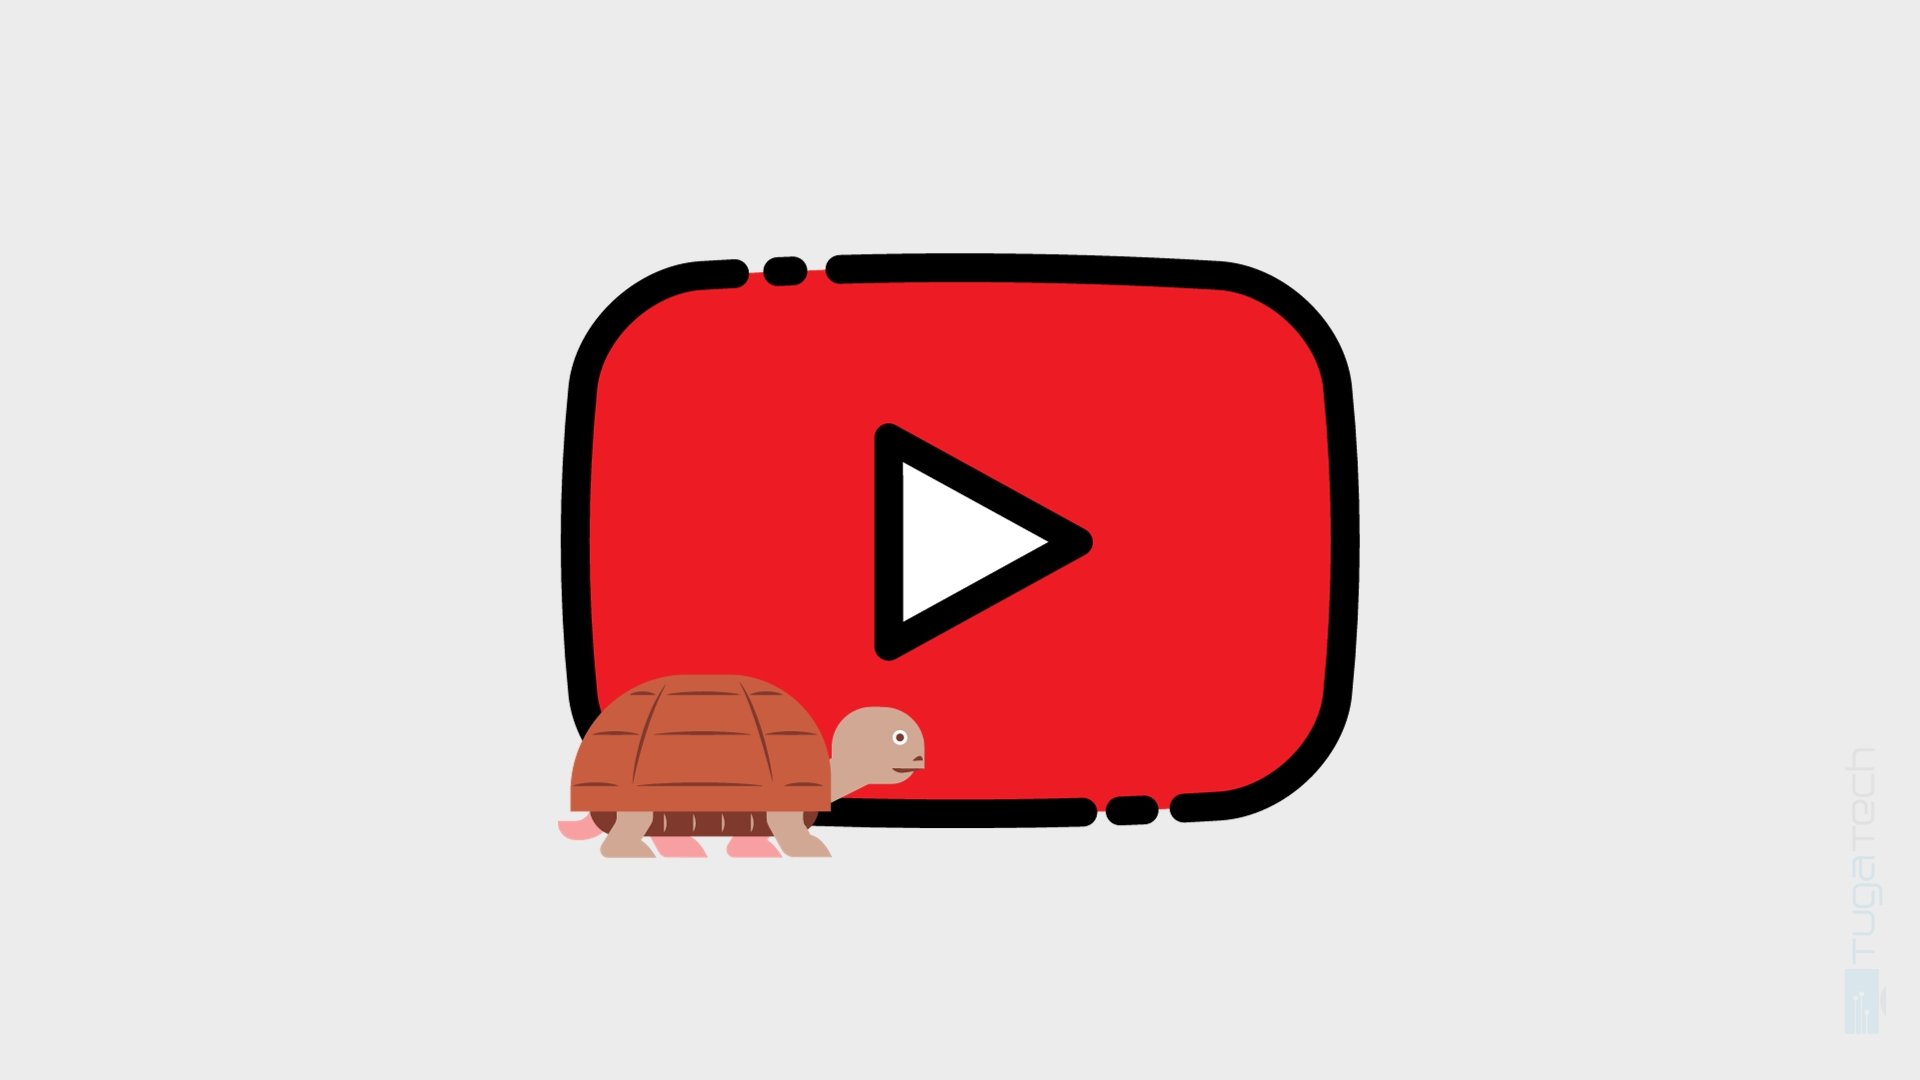 Logo do youtube com tartaruga